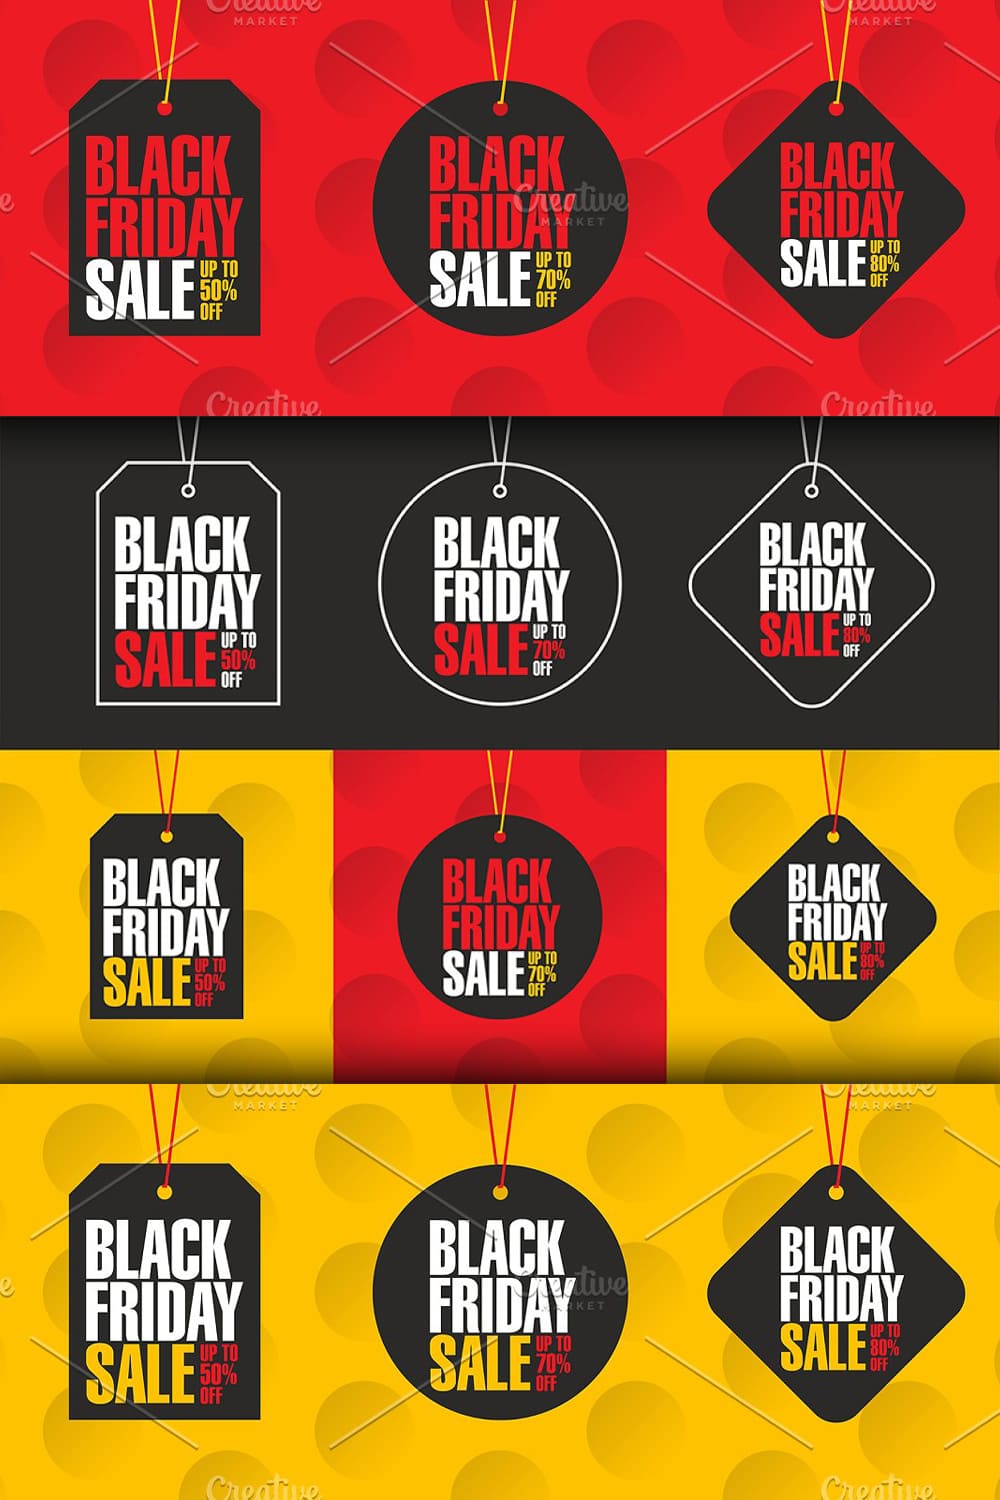 Black Friday Banners - Pinterest.